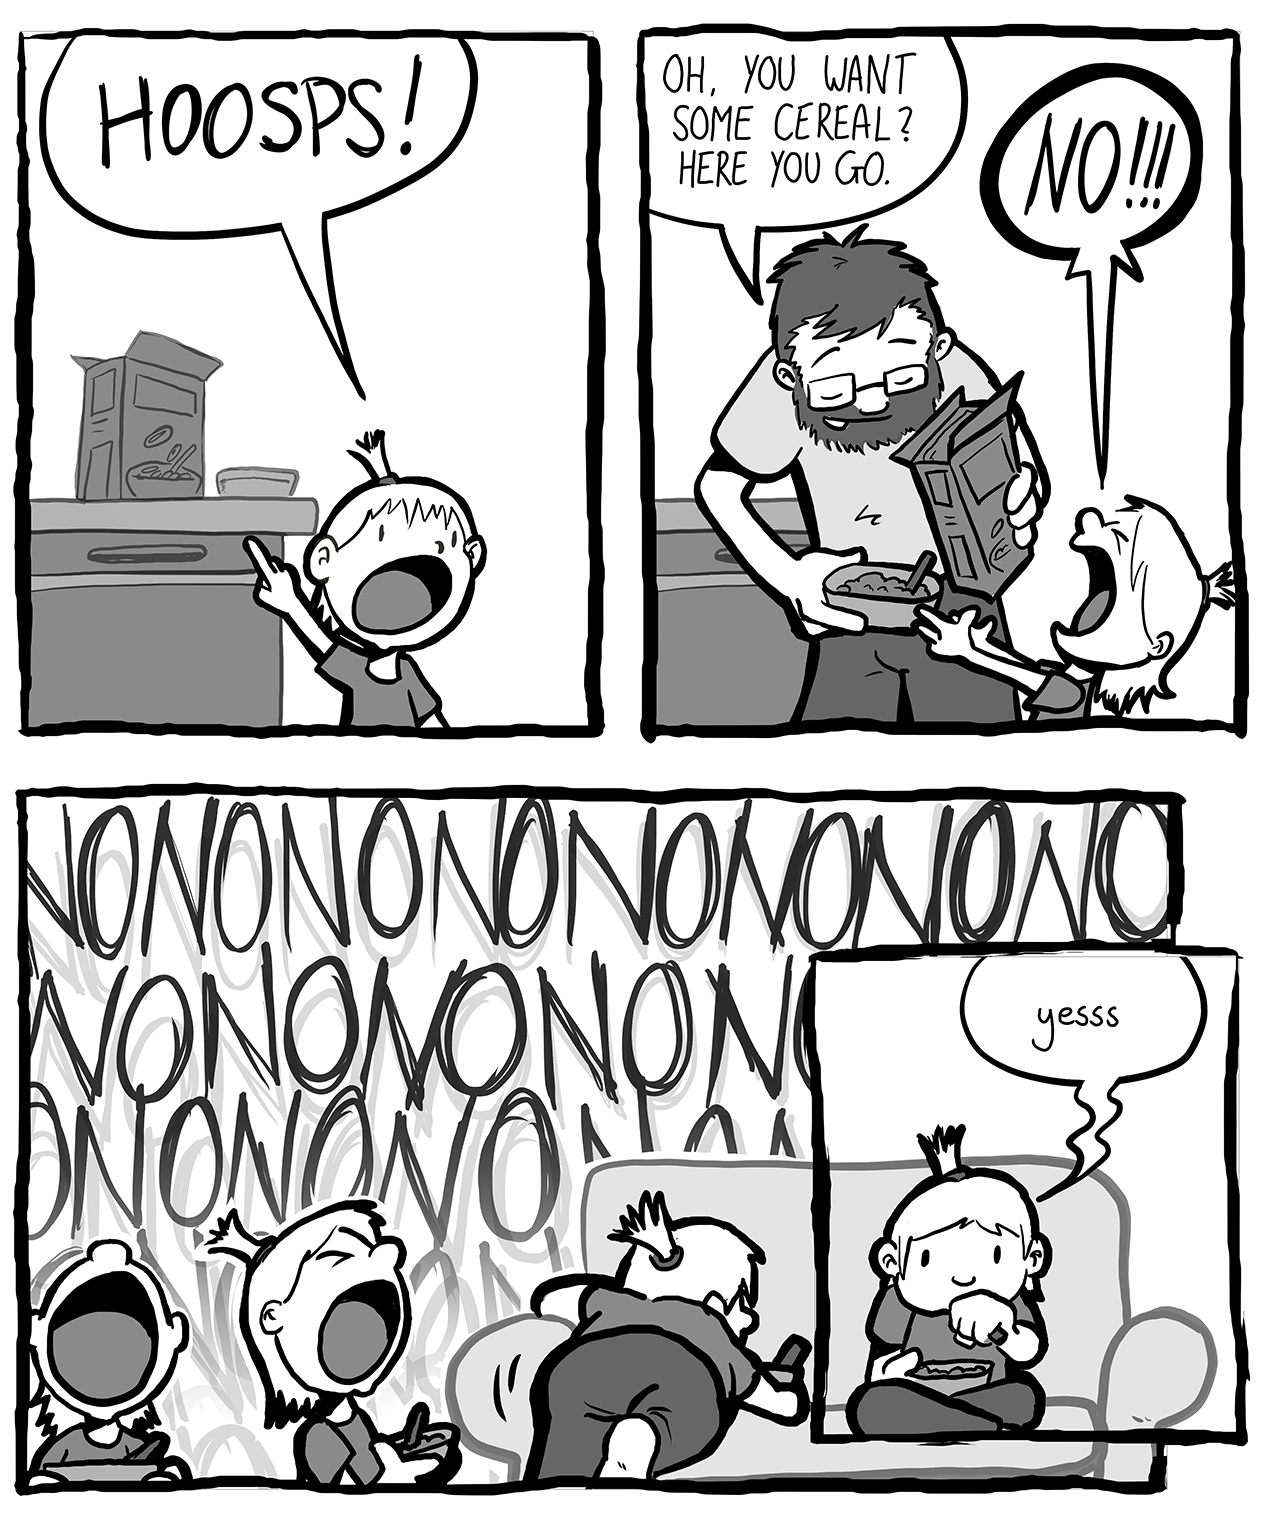 A comic strip where a small child yells at a man.